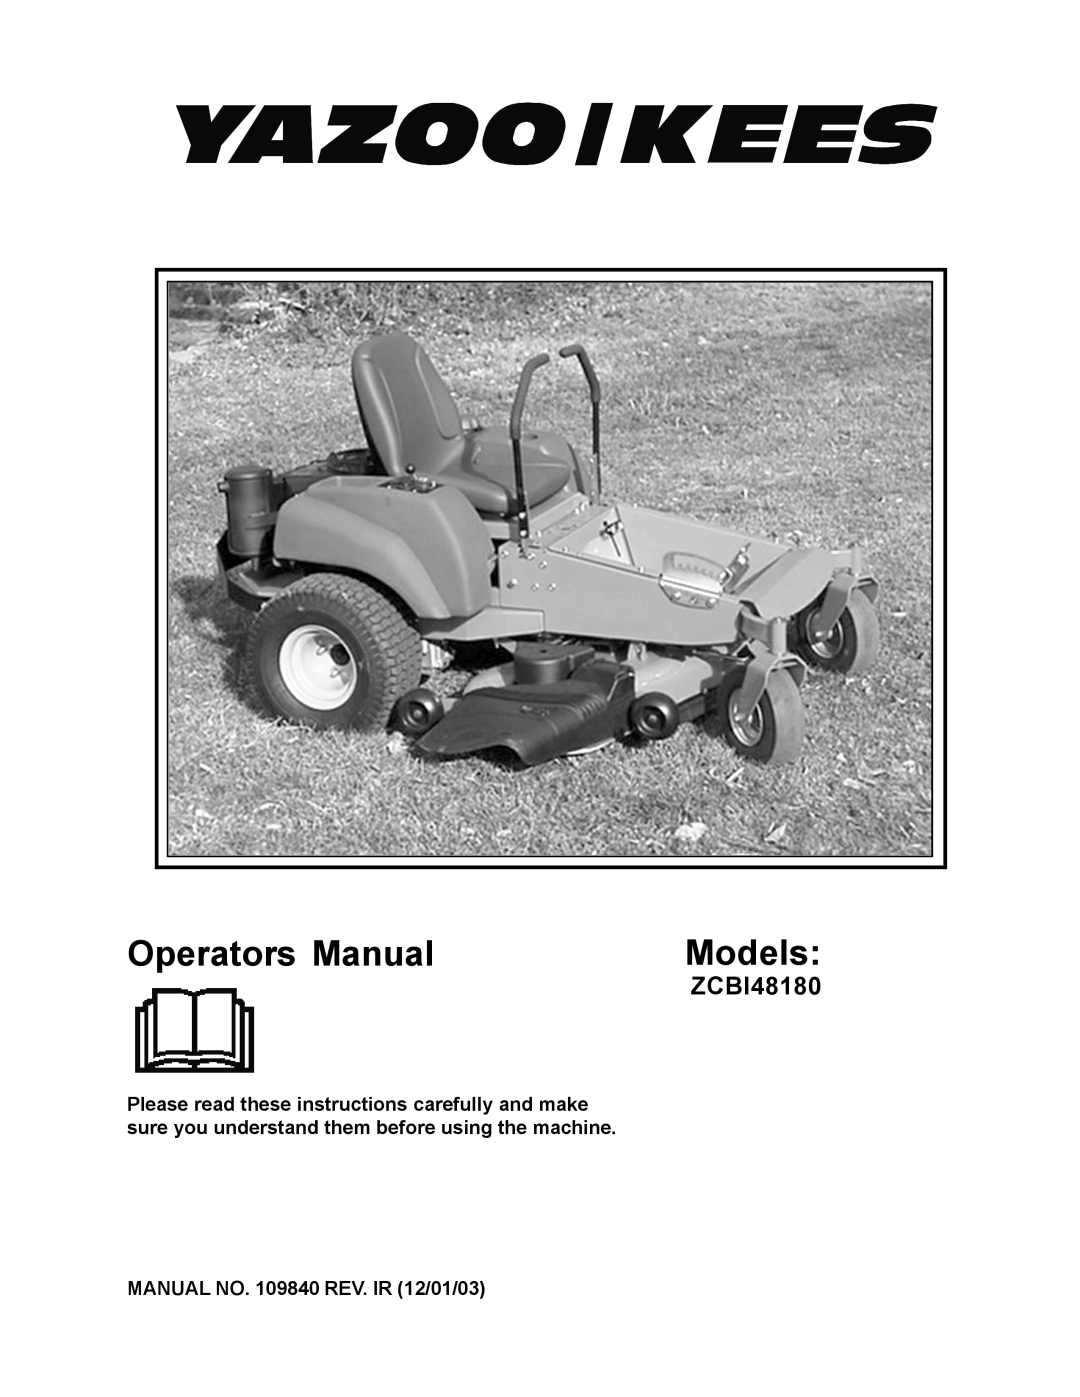 Yazoo/Kees ZCBI48180 manual Operators Manual, Models 